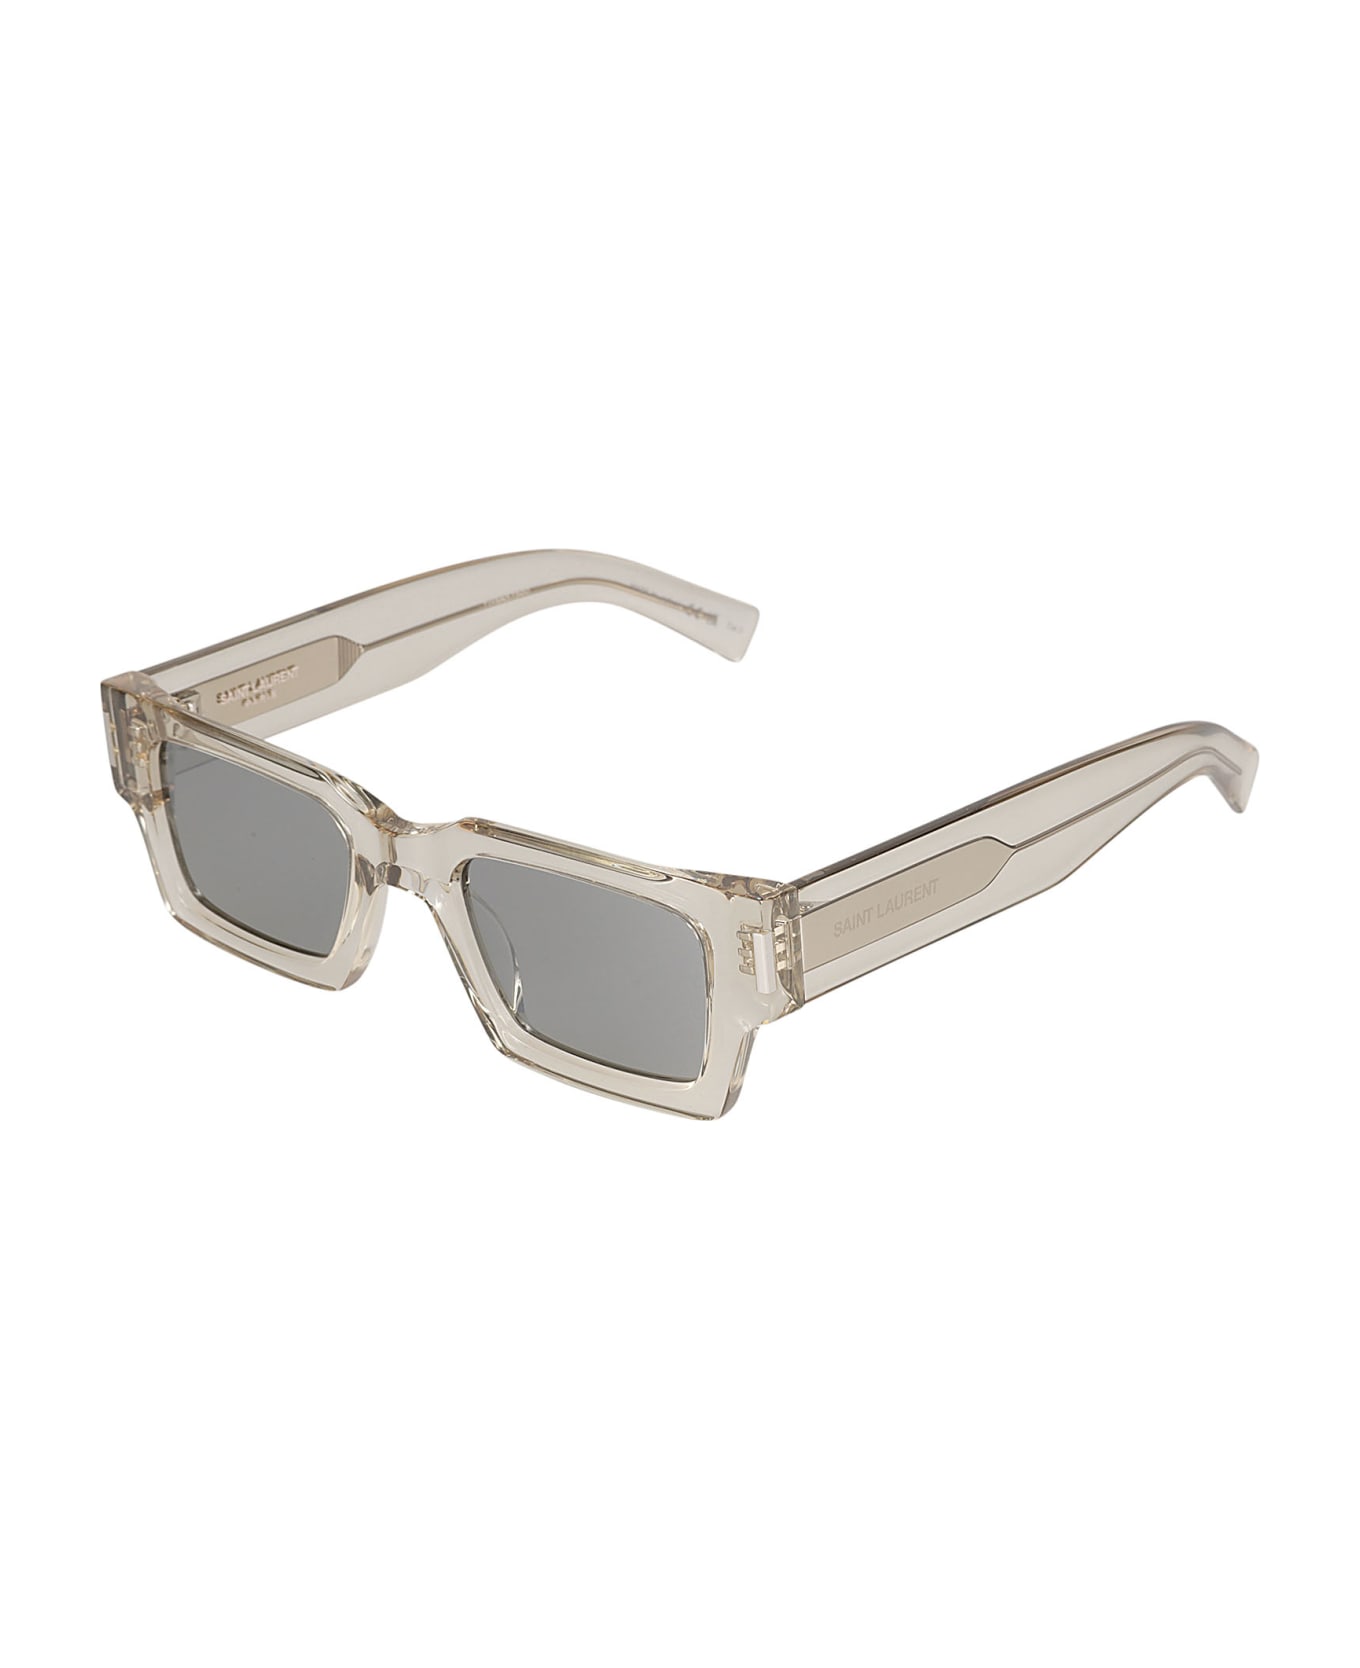 Saint Laurent Eyewear Square Frame Transparent Sunglasses - Beige/Silver サングラス